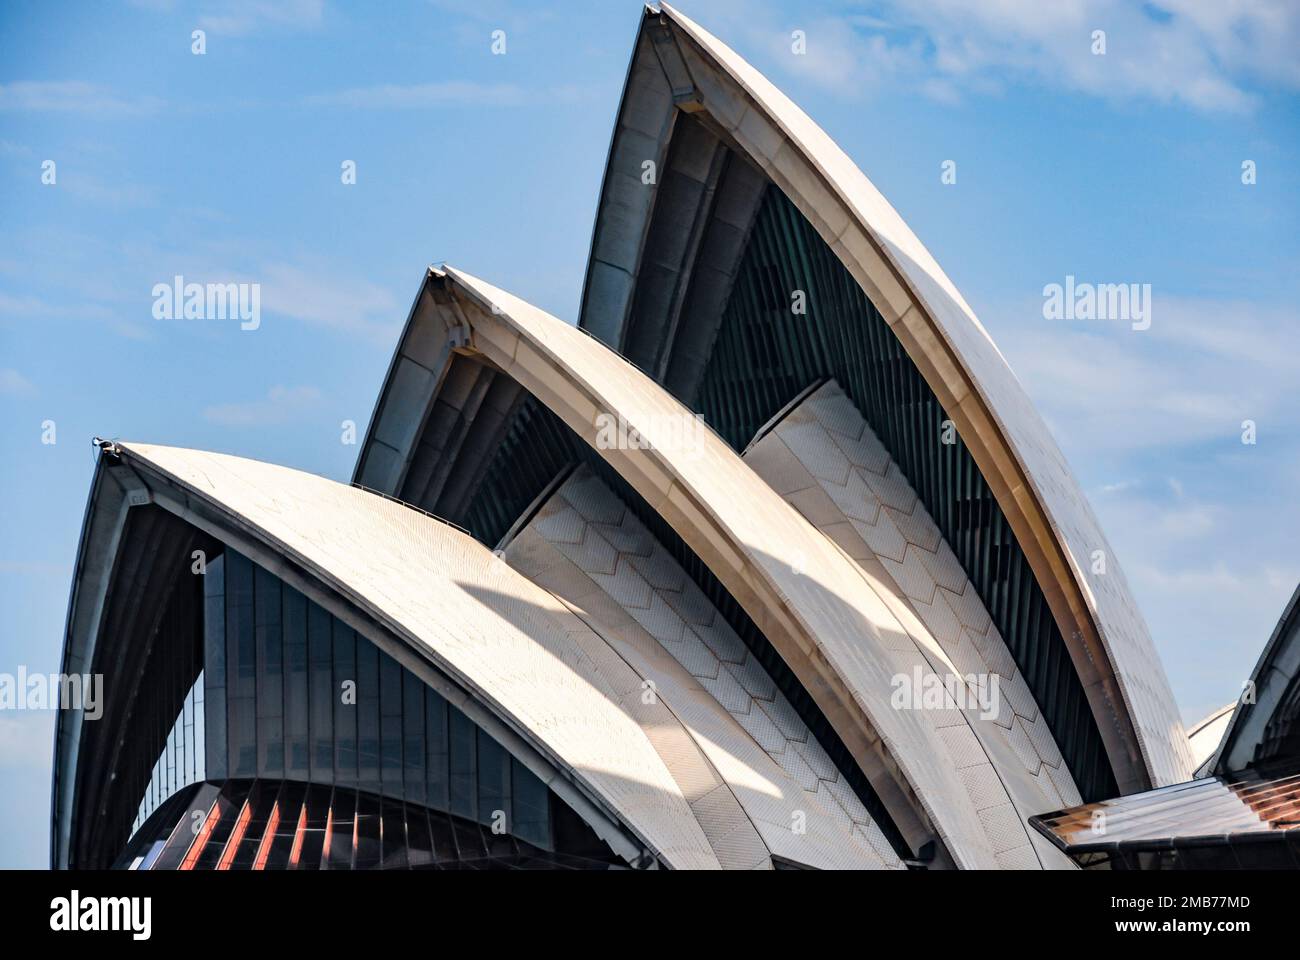 Sydney Opera House roof in Australia Stock Photo - Alamy